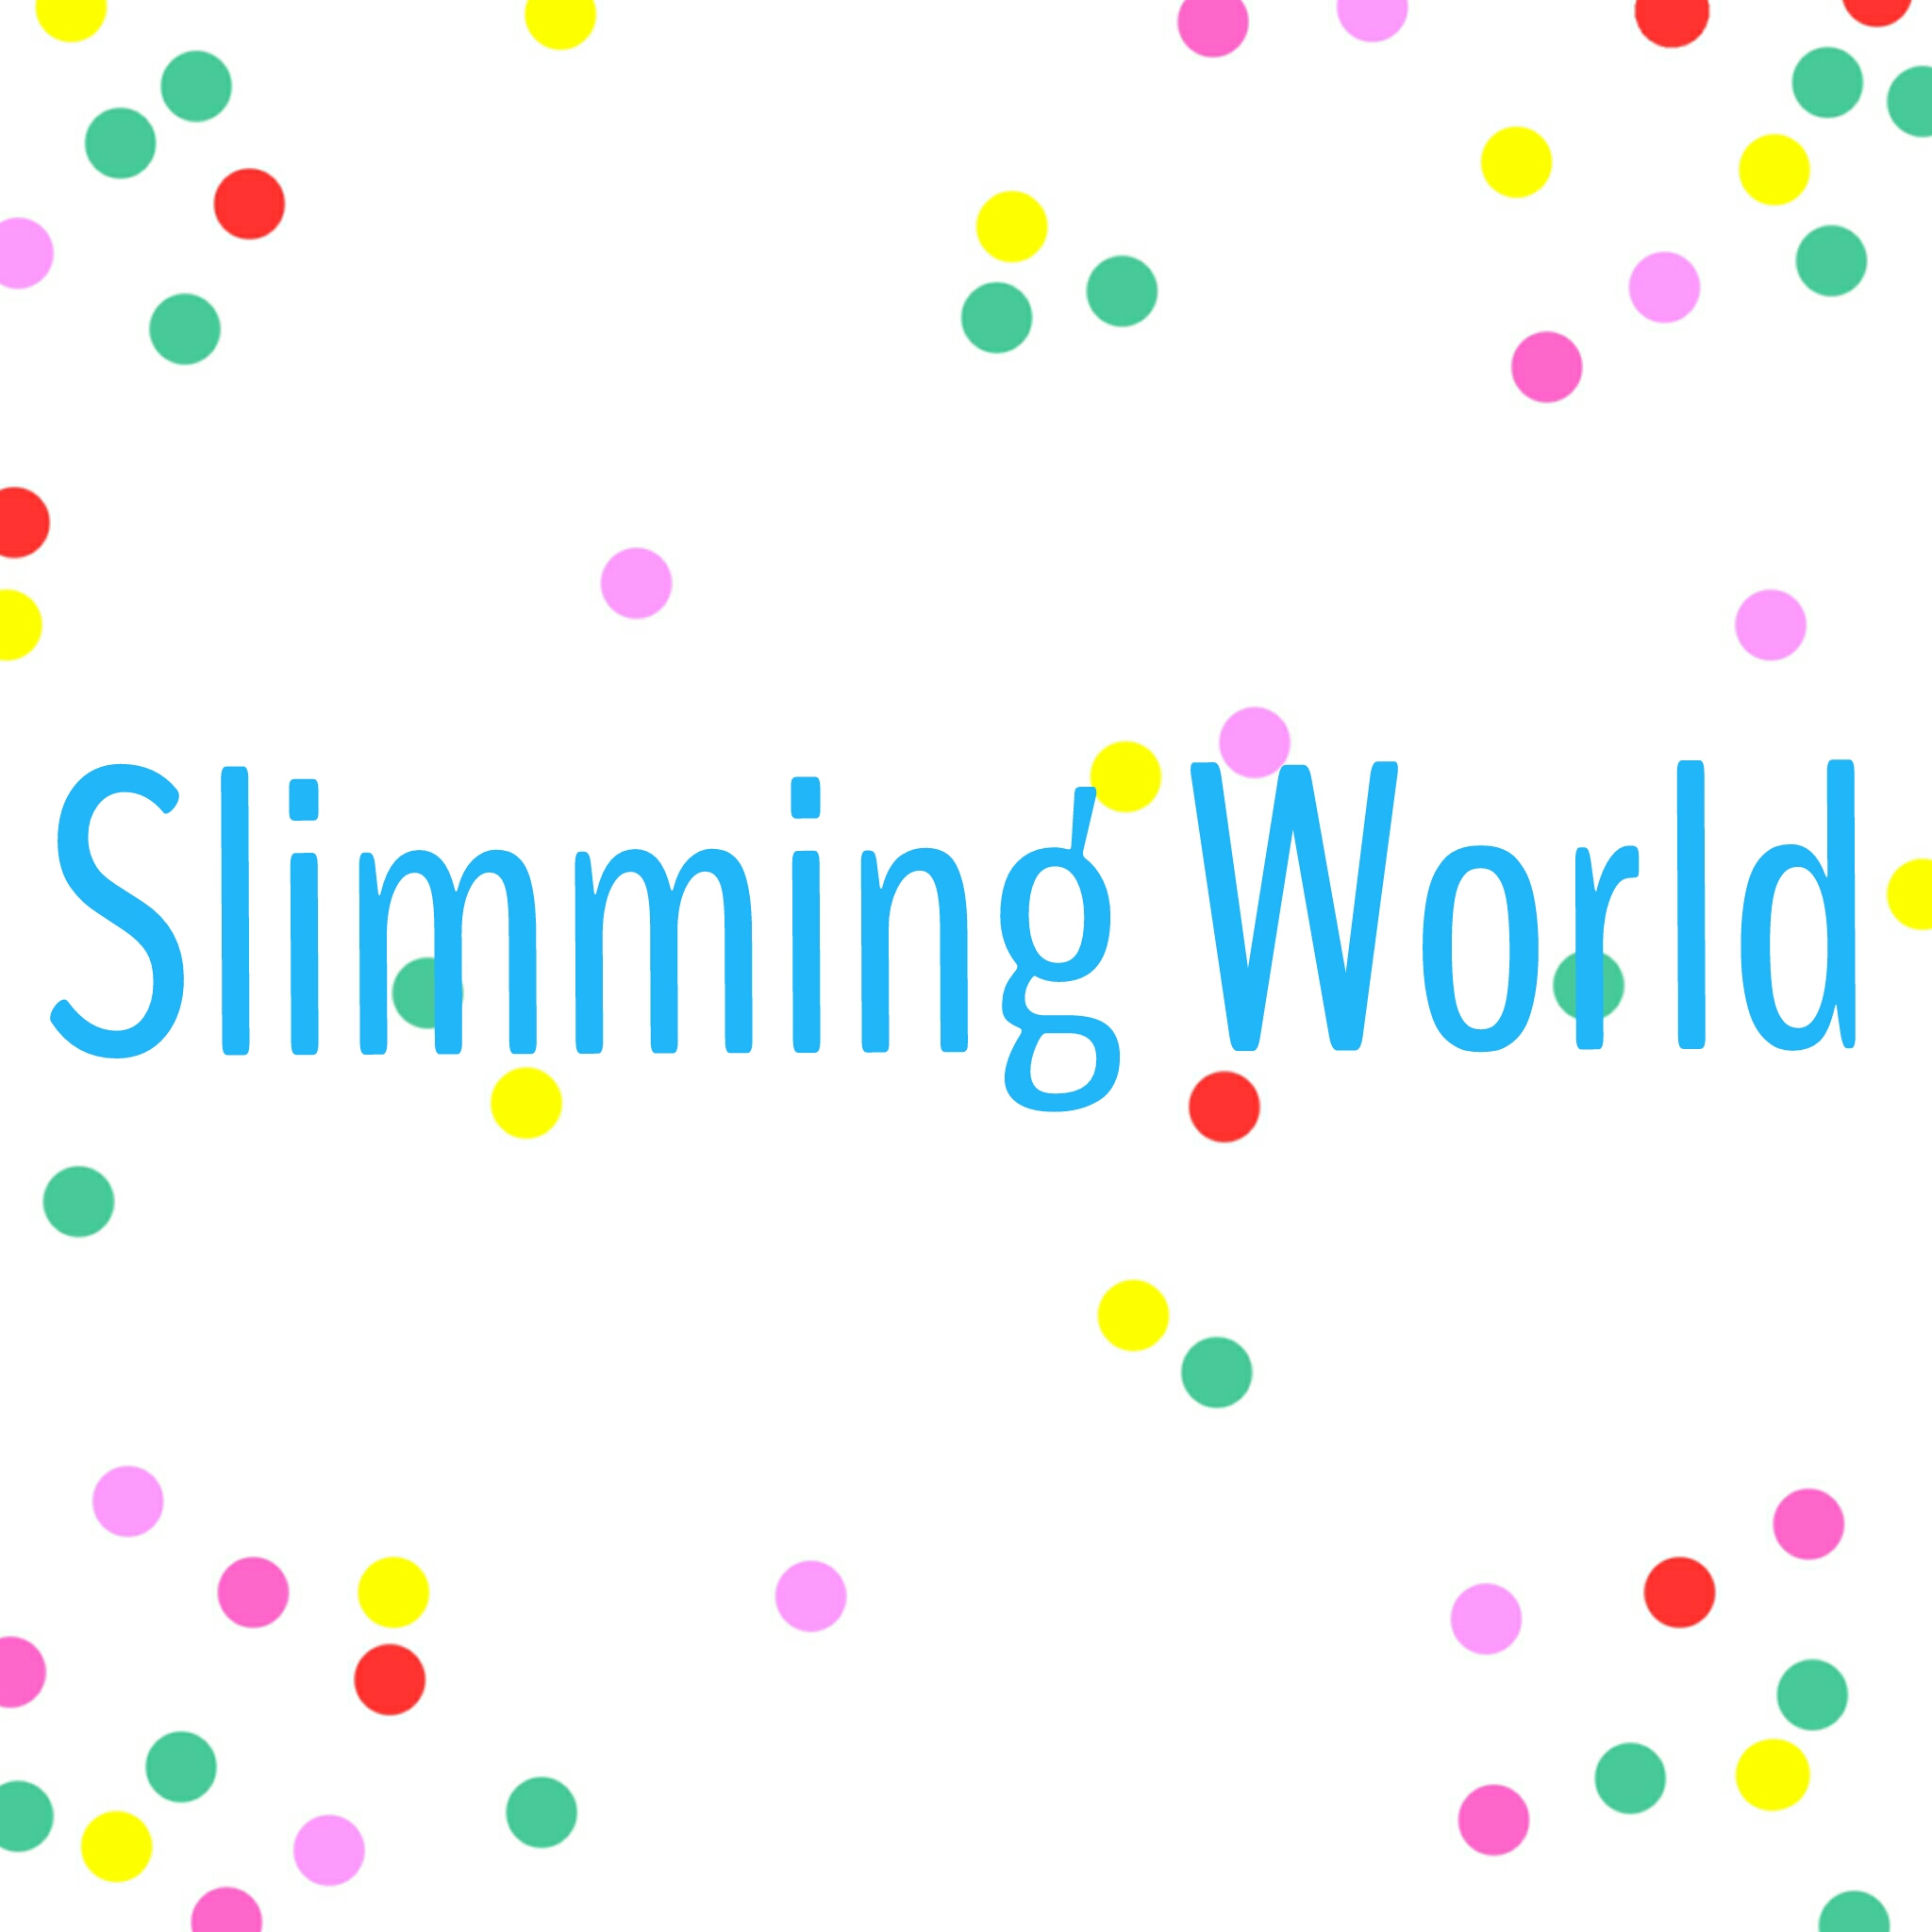 The Return of Slimming World